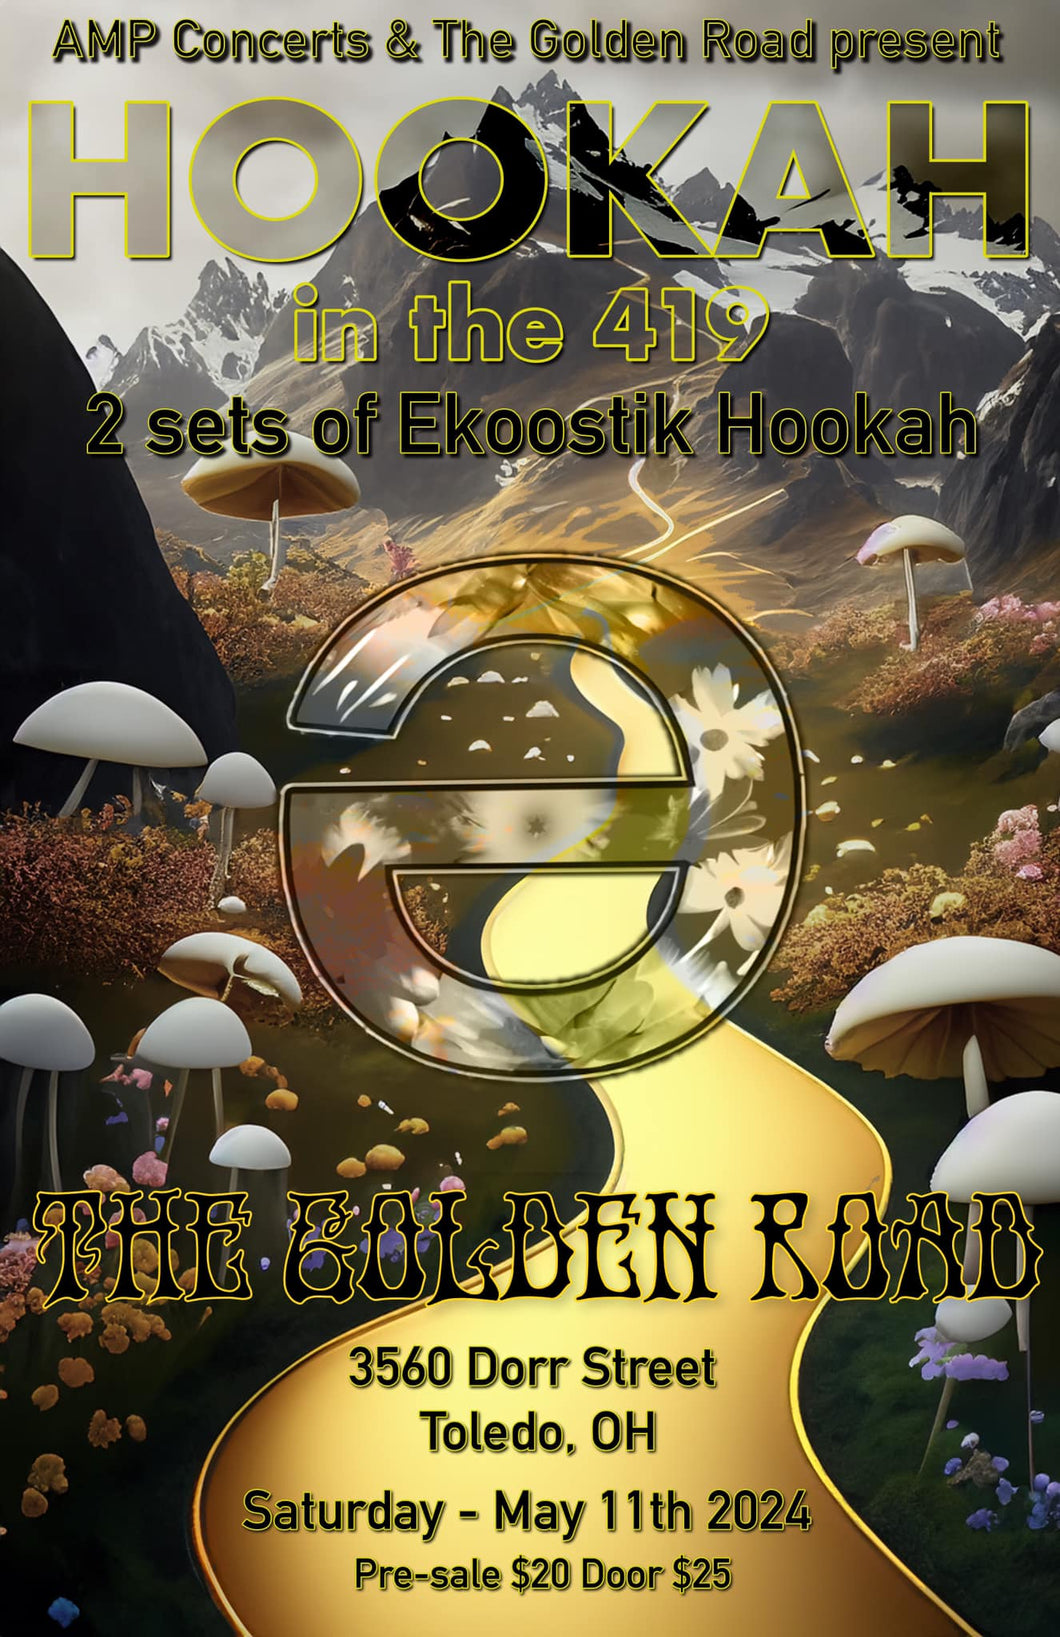 Advance Tickets for ekoostik hookah at The Golden Road on 5/11/24